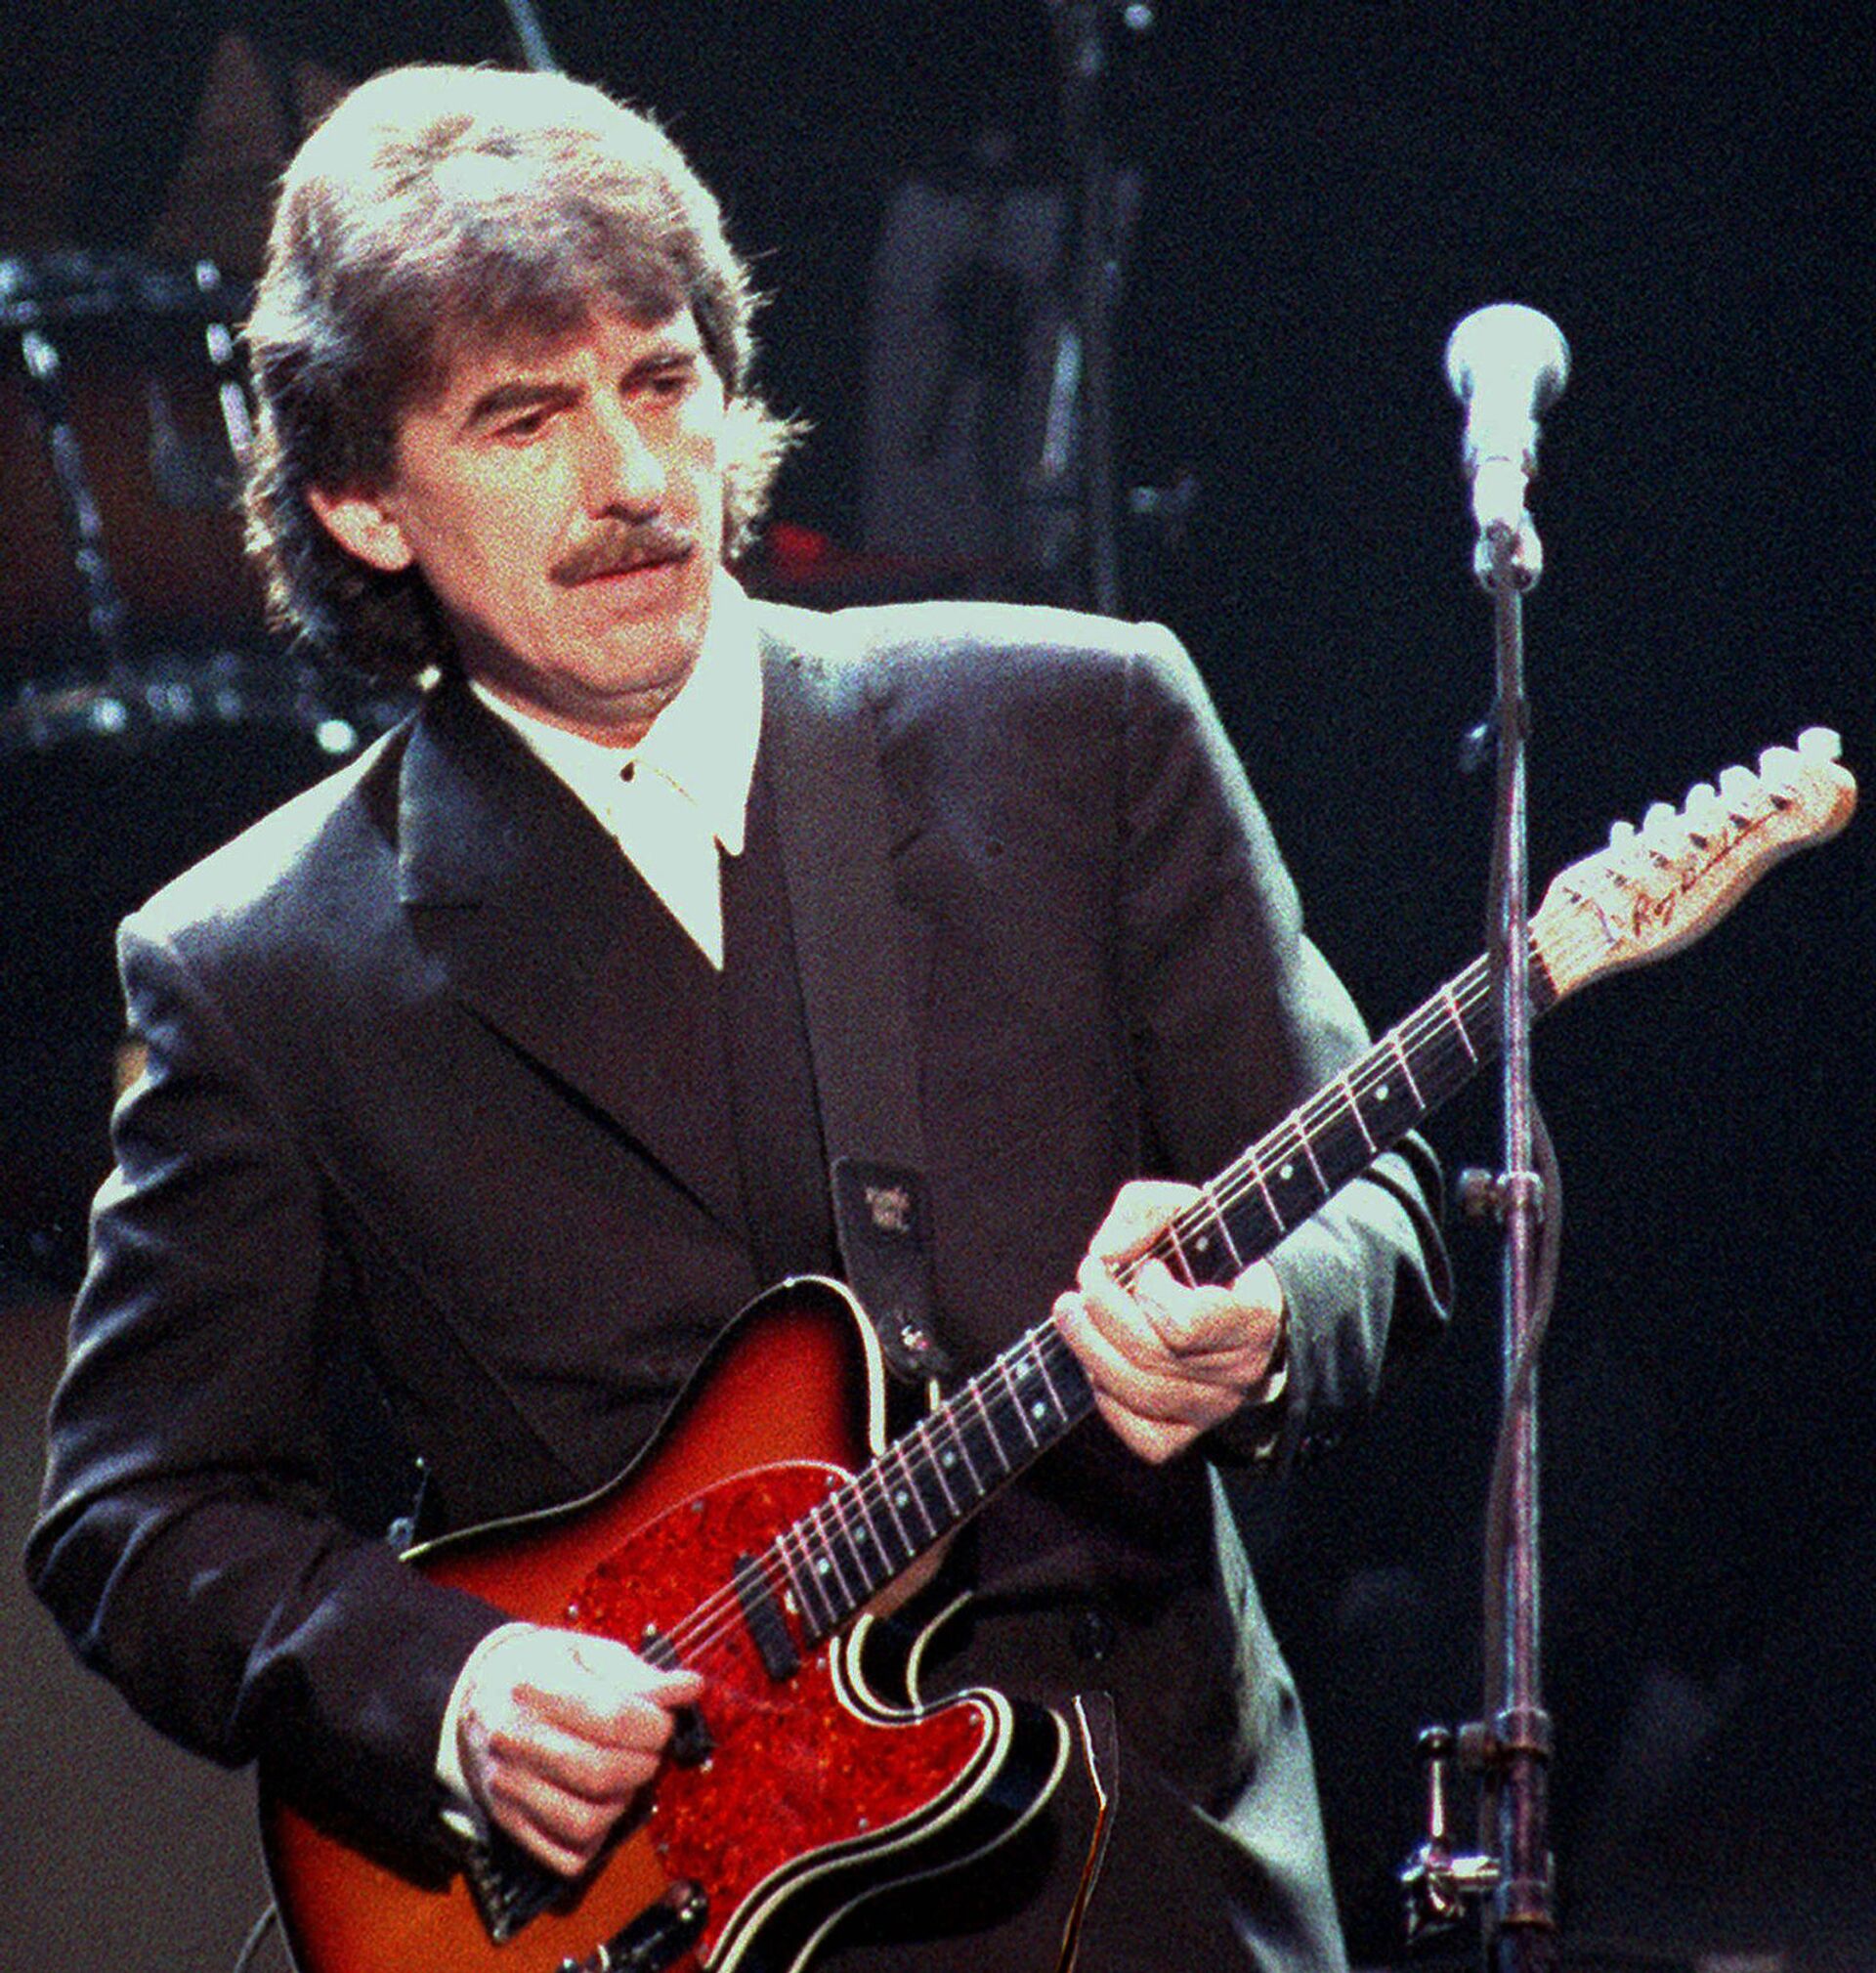 Бывший гитарист группы Битлз Джордж Харрисон на сцене во время концерта (6 апреля 1995). Лондон - Sputnik Армения, 1920, 14.09.2021